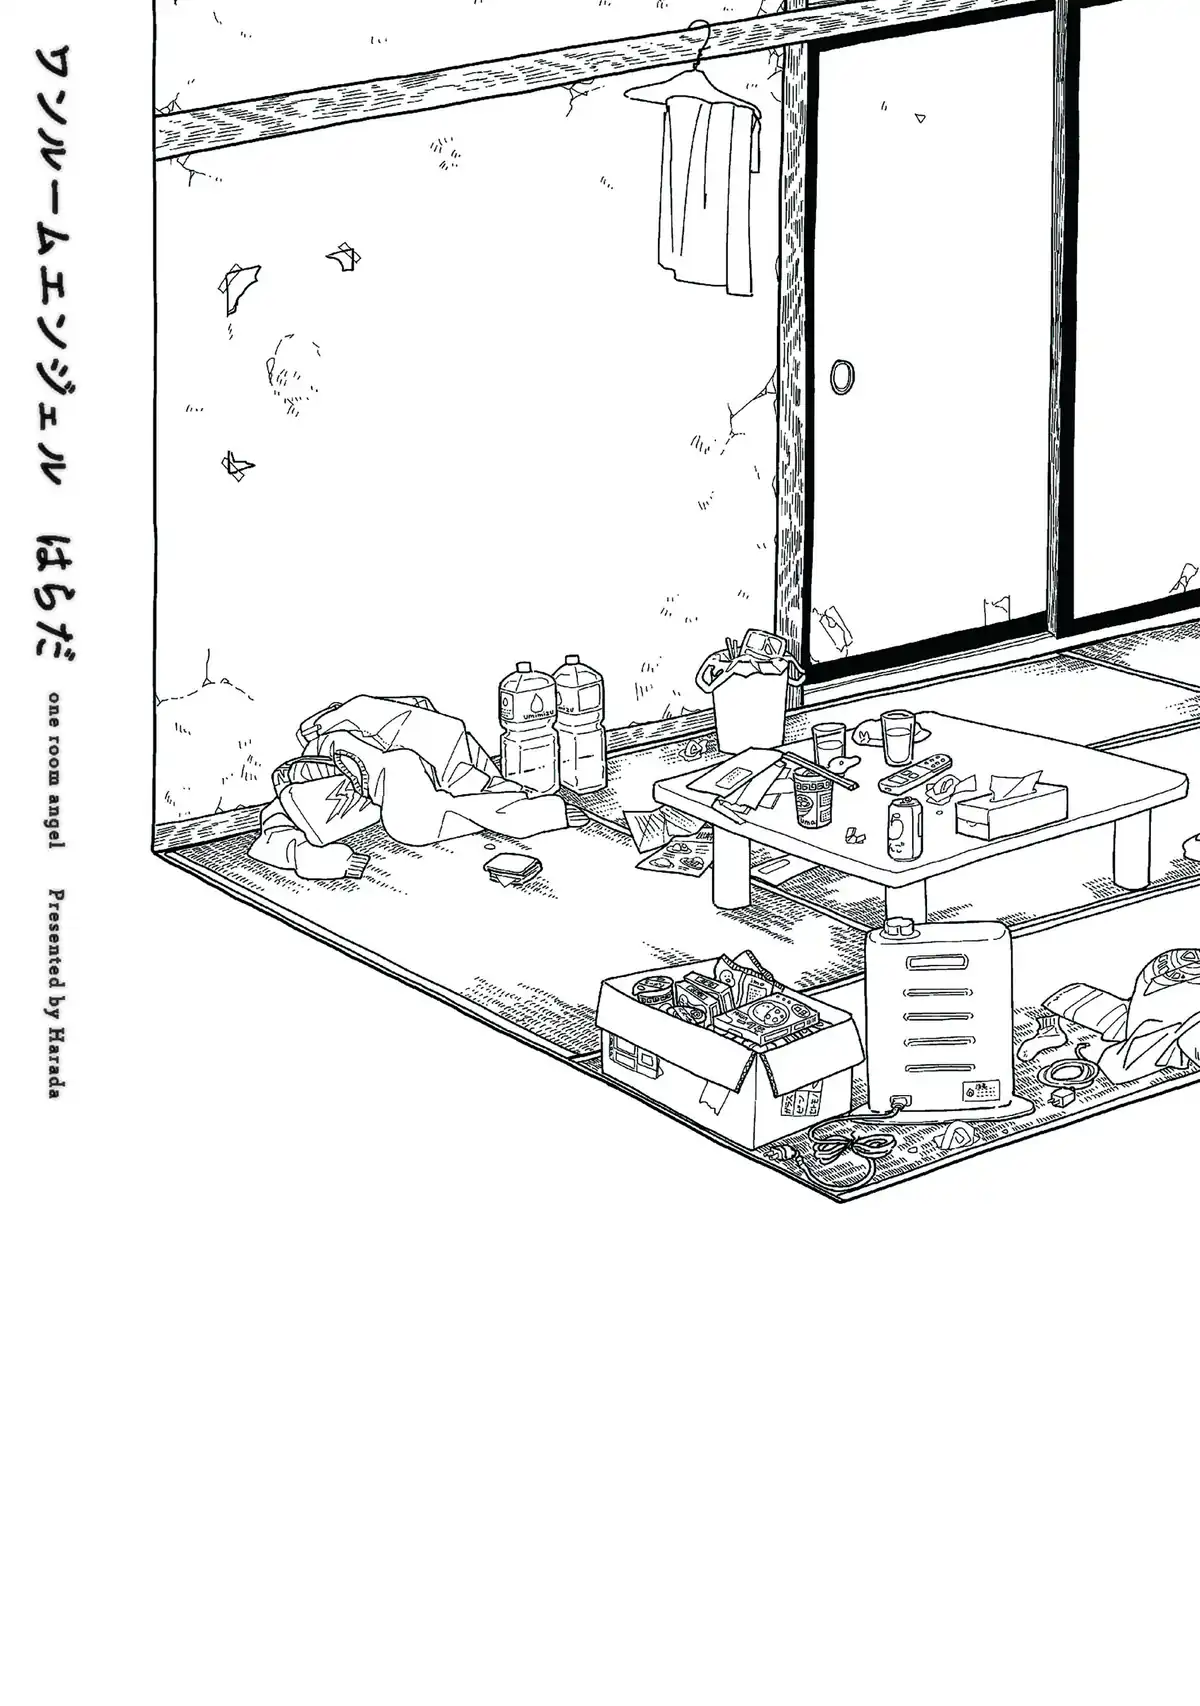 Japanese Yaoi BL Manga Comic Book / HARADA 'One Room Angel' はらだ ワンルームエンジェル